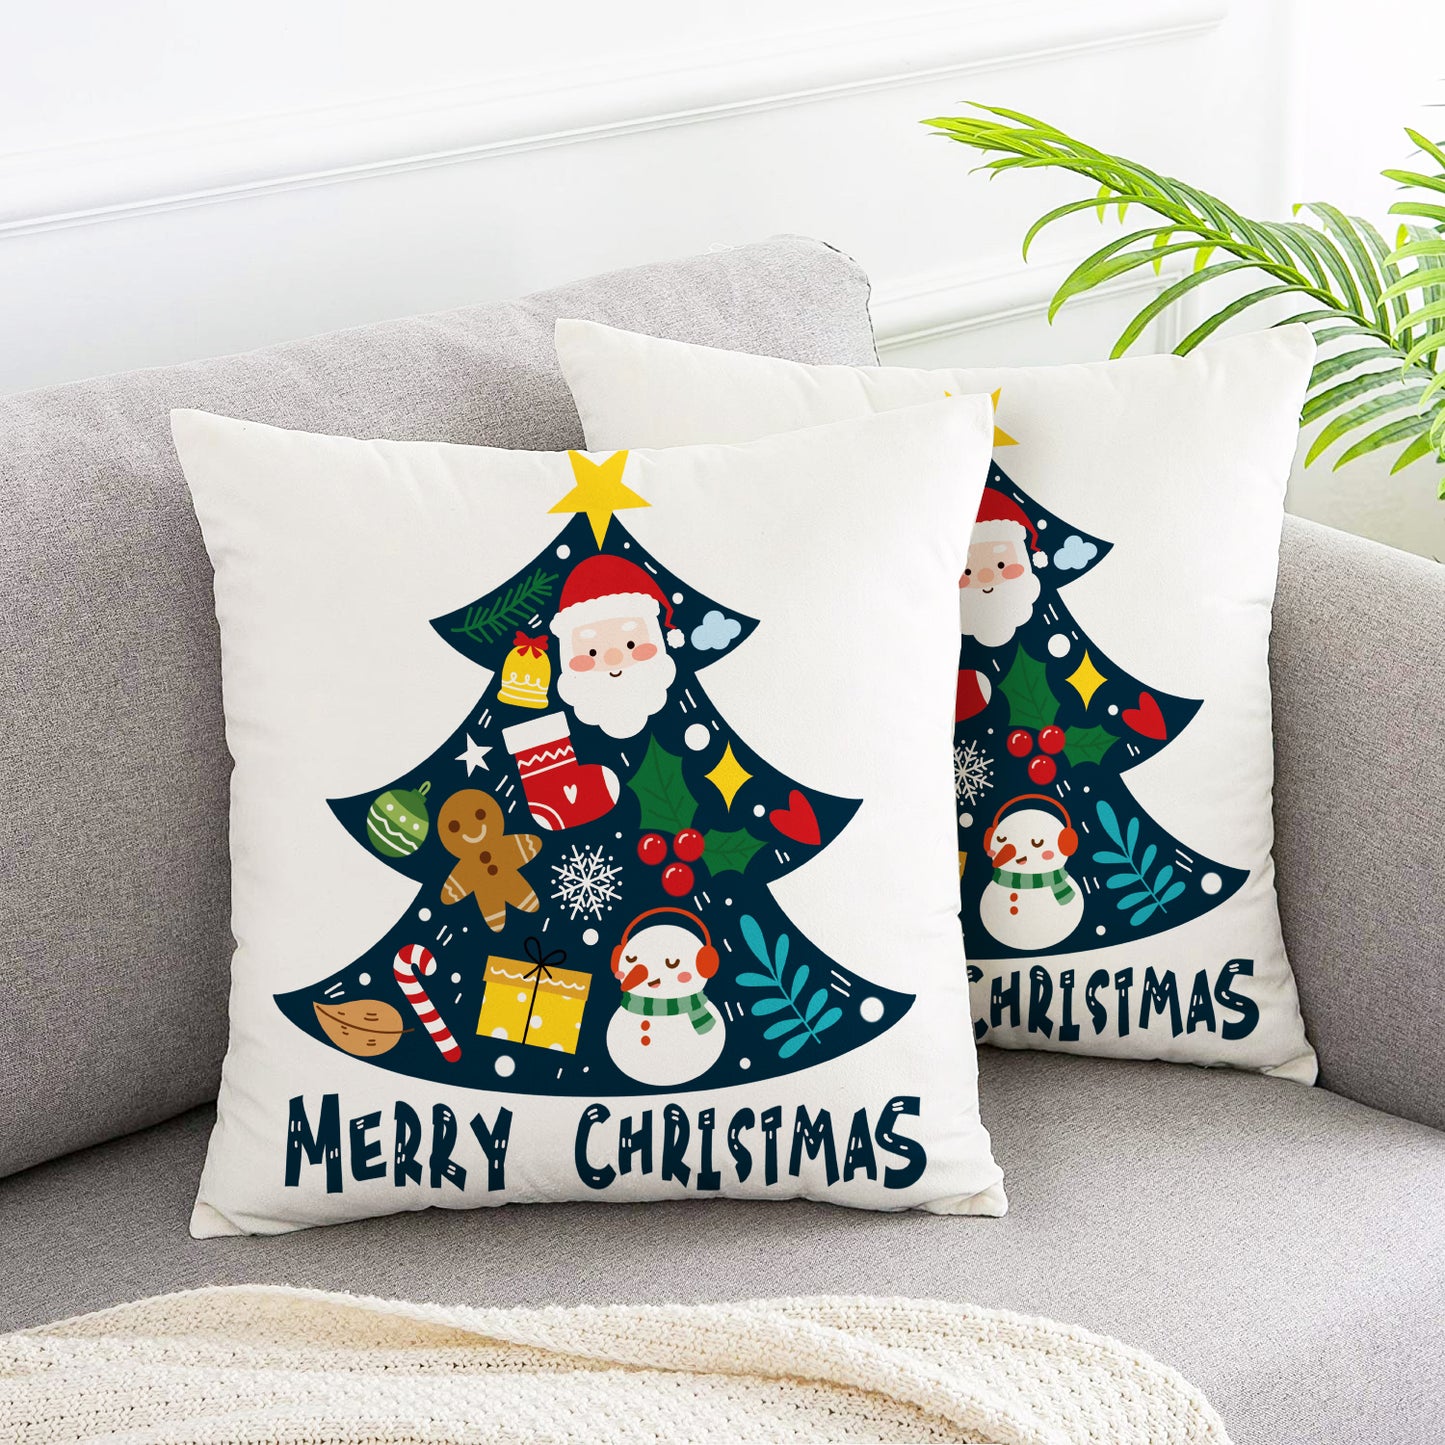 Green christmas tree silhouette celebration pillow covers 2pcs